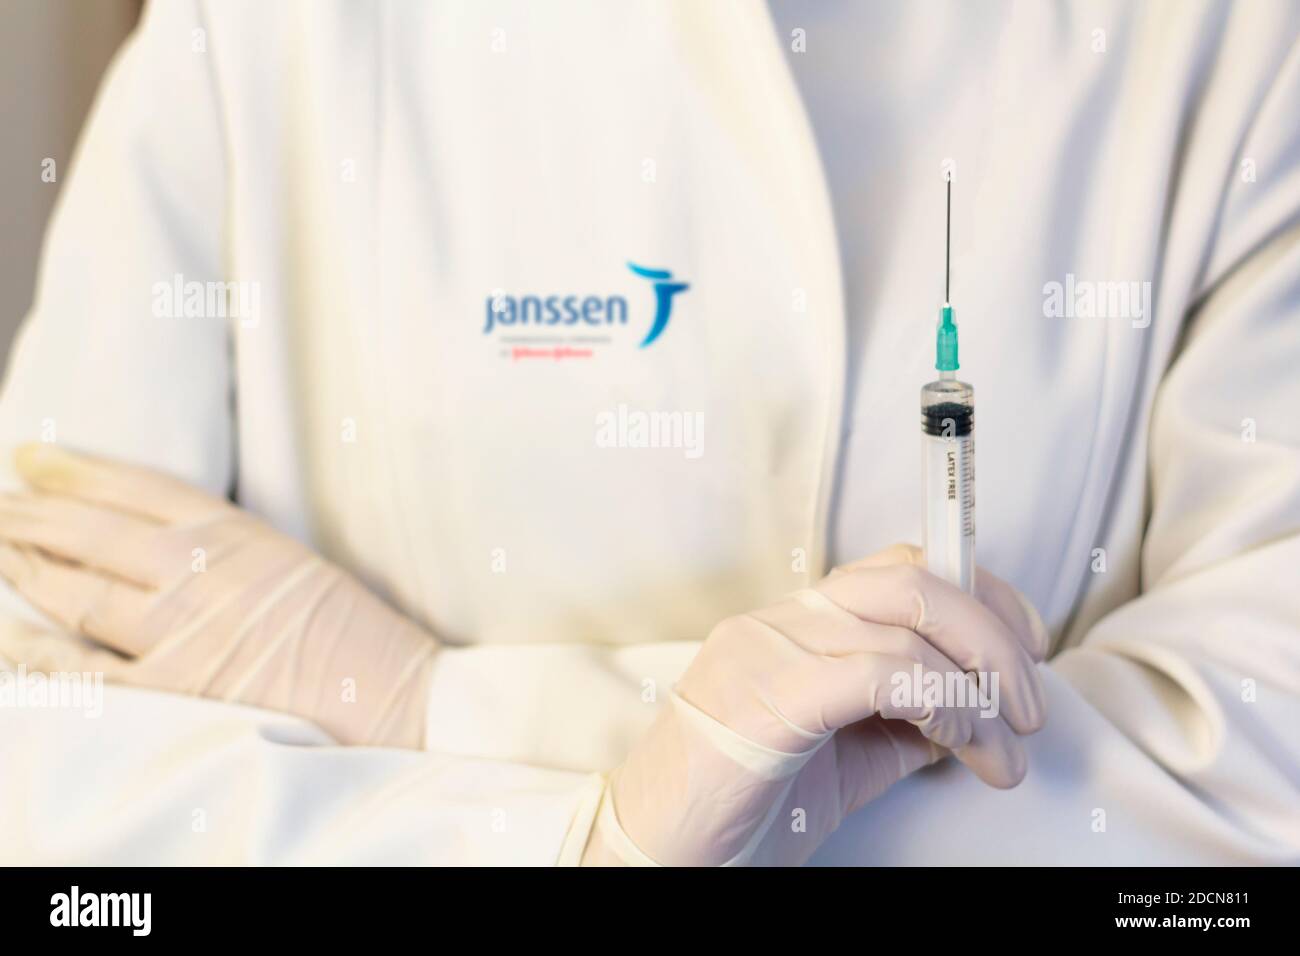 Lisbon, Portugal - November 22, 2020: Medic ,scientist, pharmacist holding Syringe with Janssen logo on lab coat. Coronavirus, Covid-19 vaccine concep Stock Photo